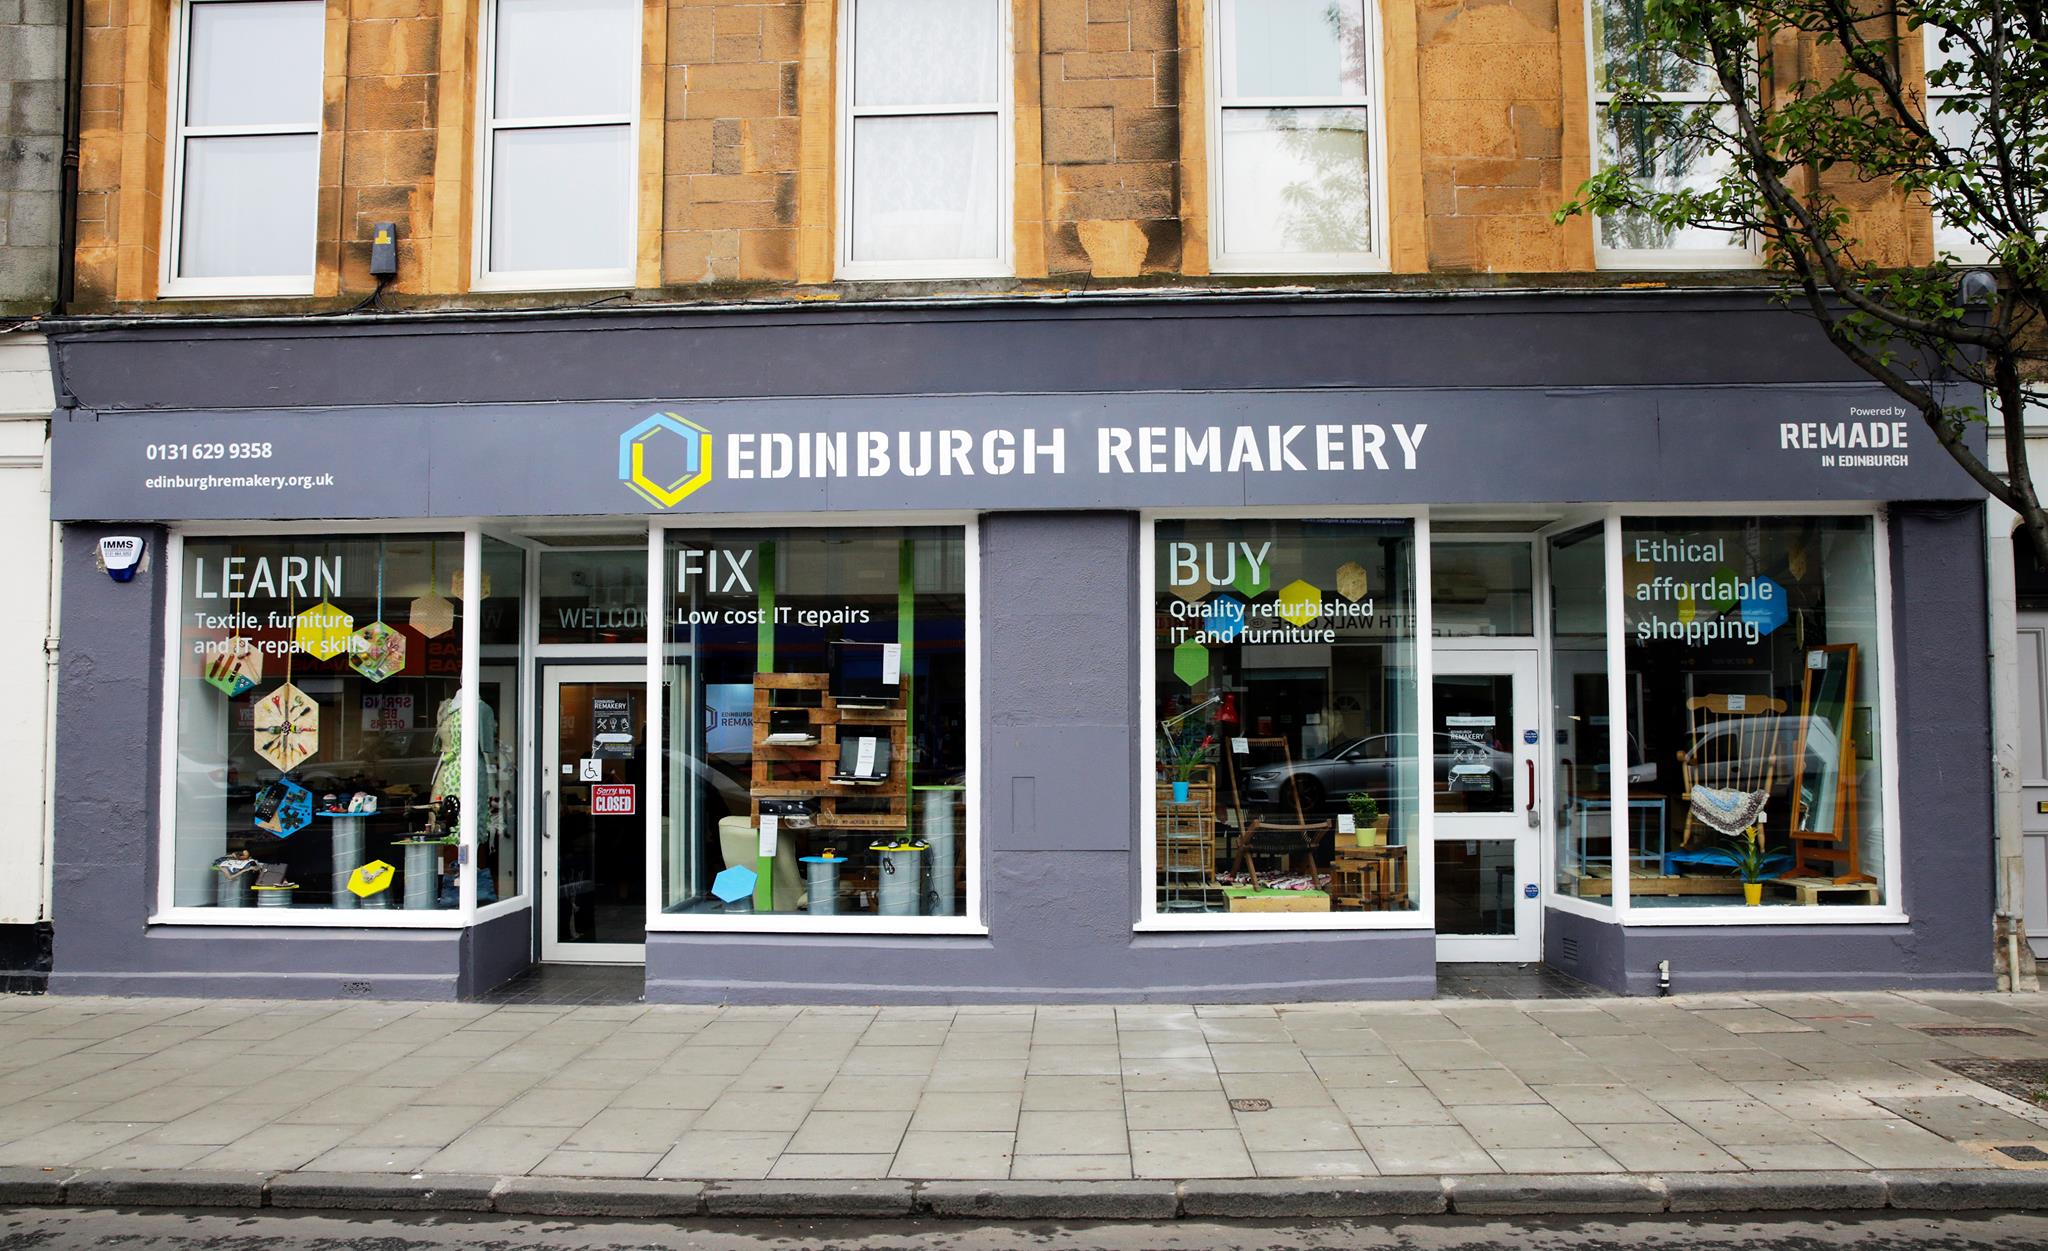 Curiouser Guide to Edinburgh: The Edinburgh Remakery